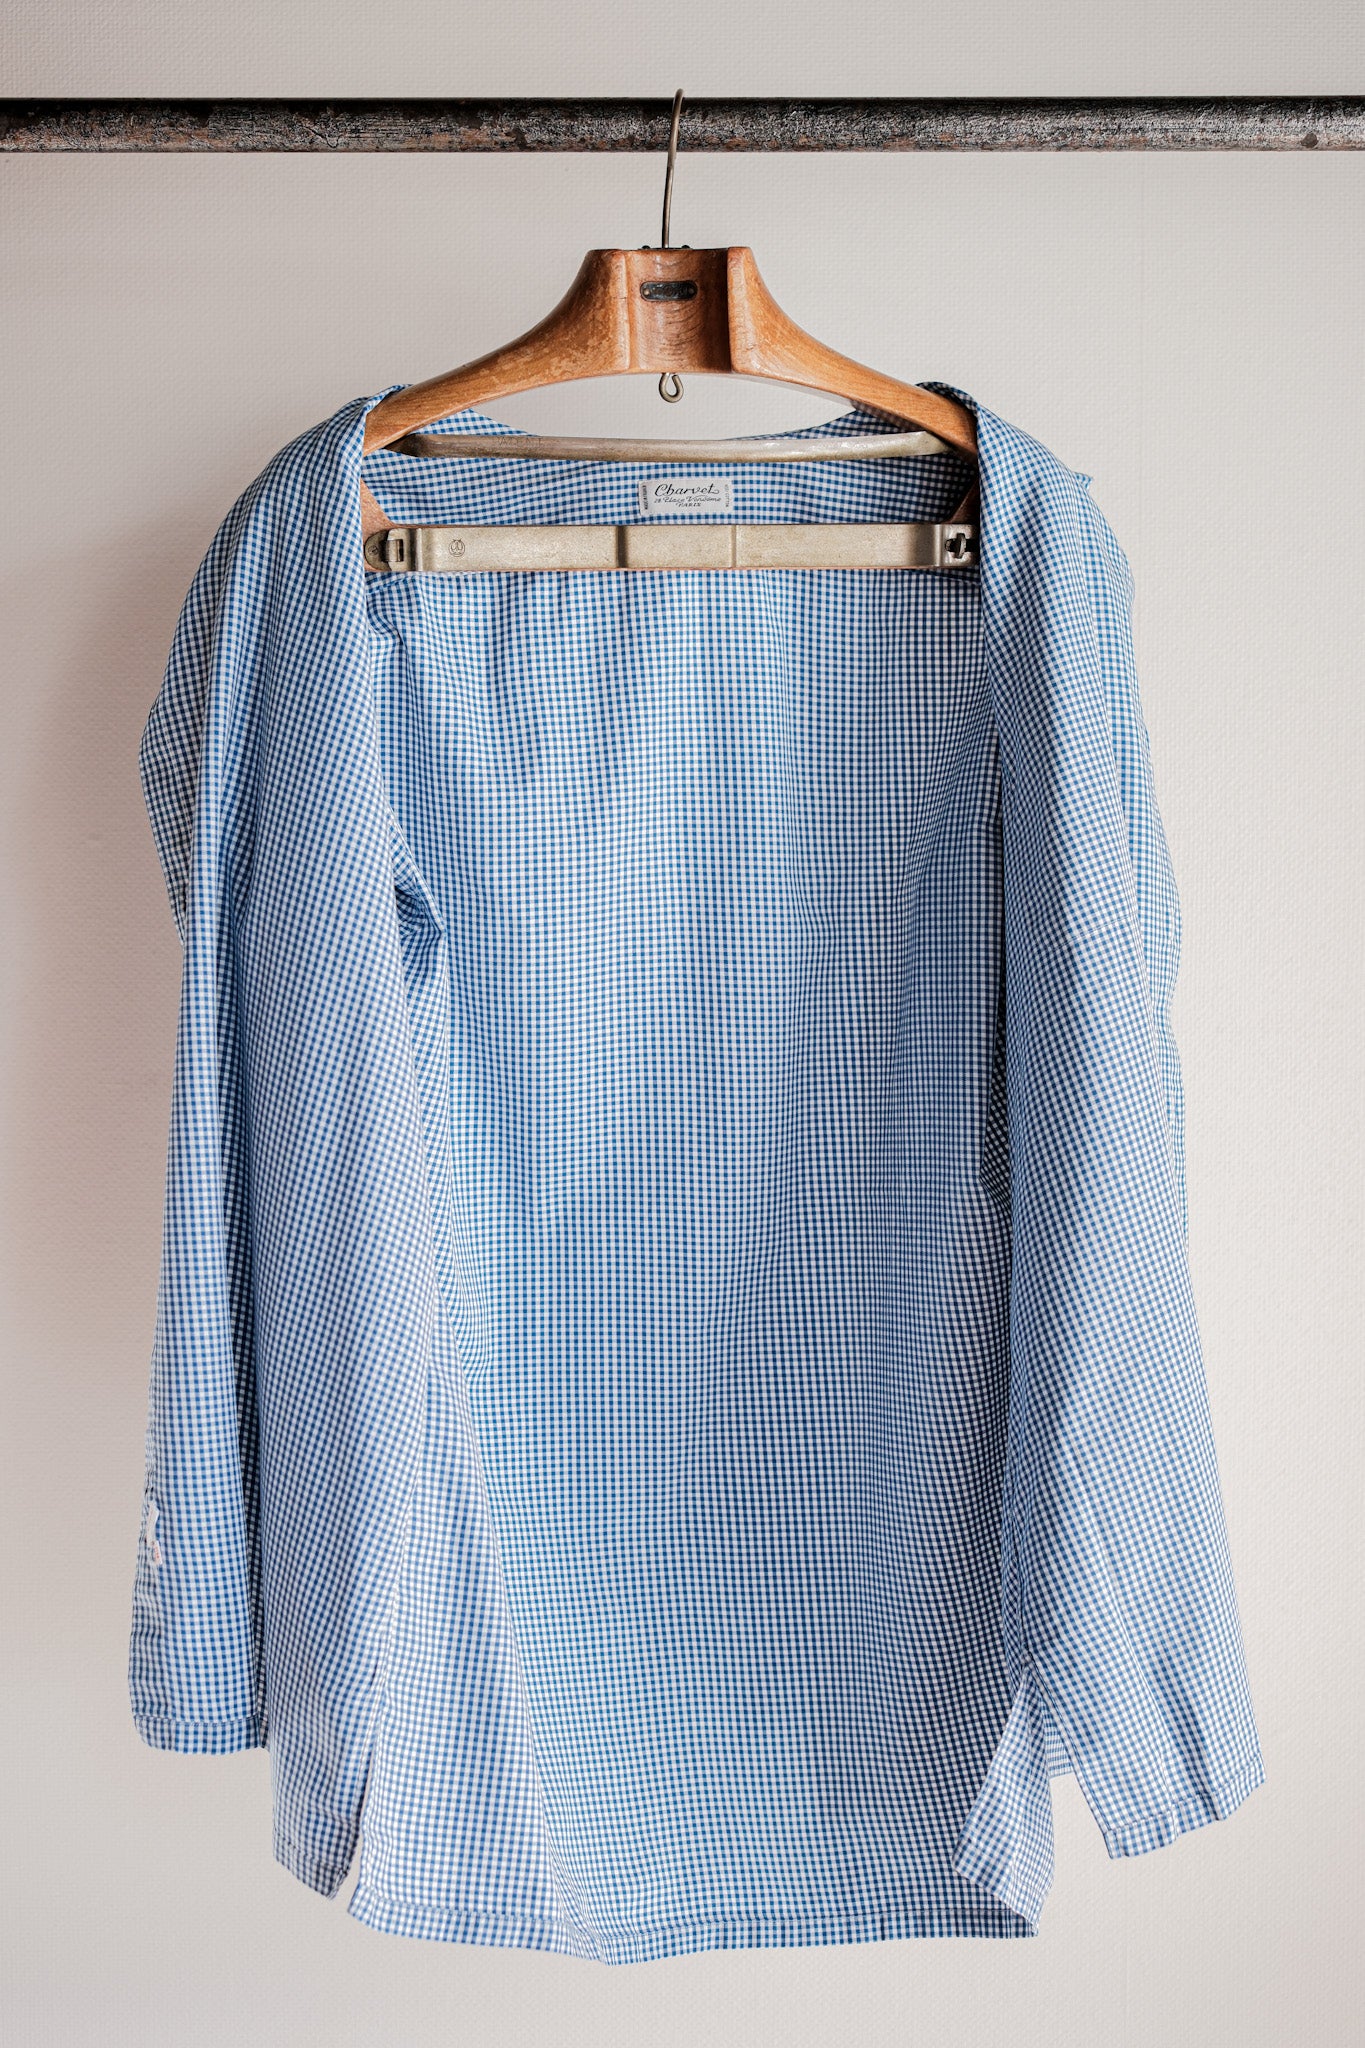 【~00's】Old Charvet Cotton Checked Dress Shirt "Bespoke"